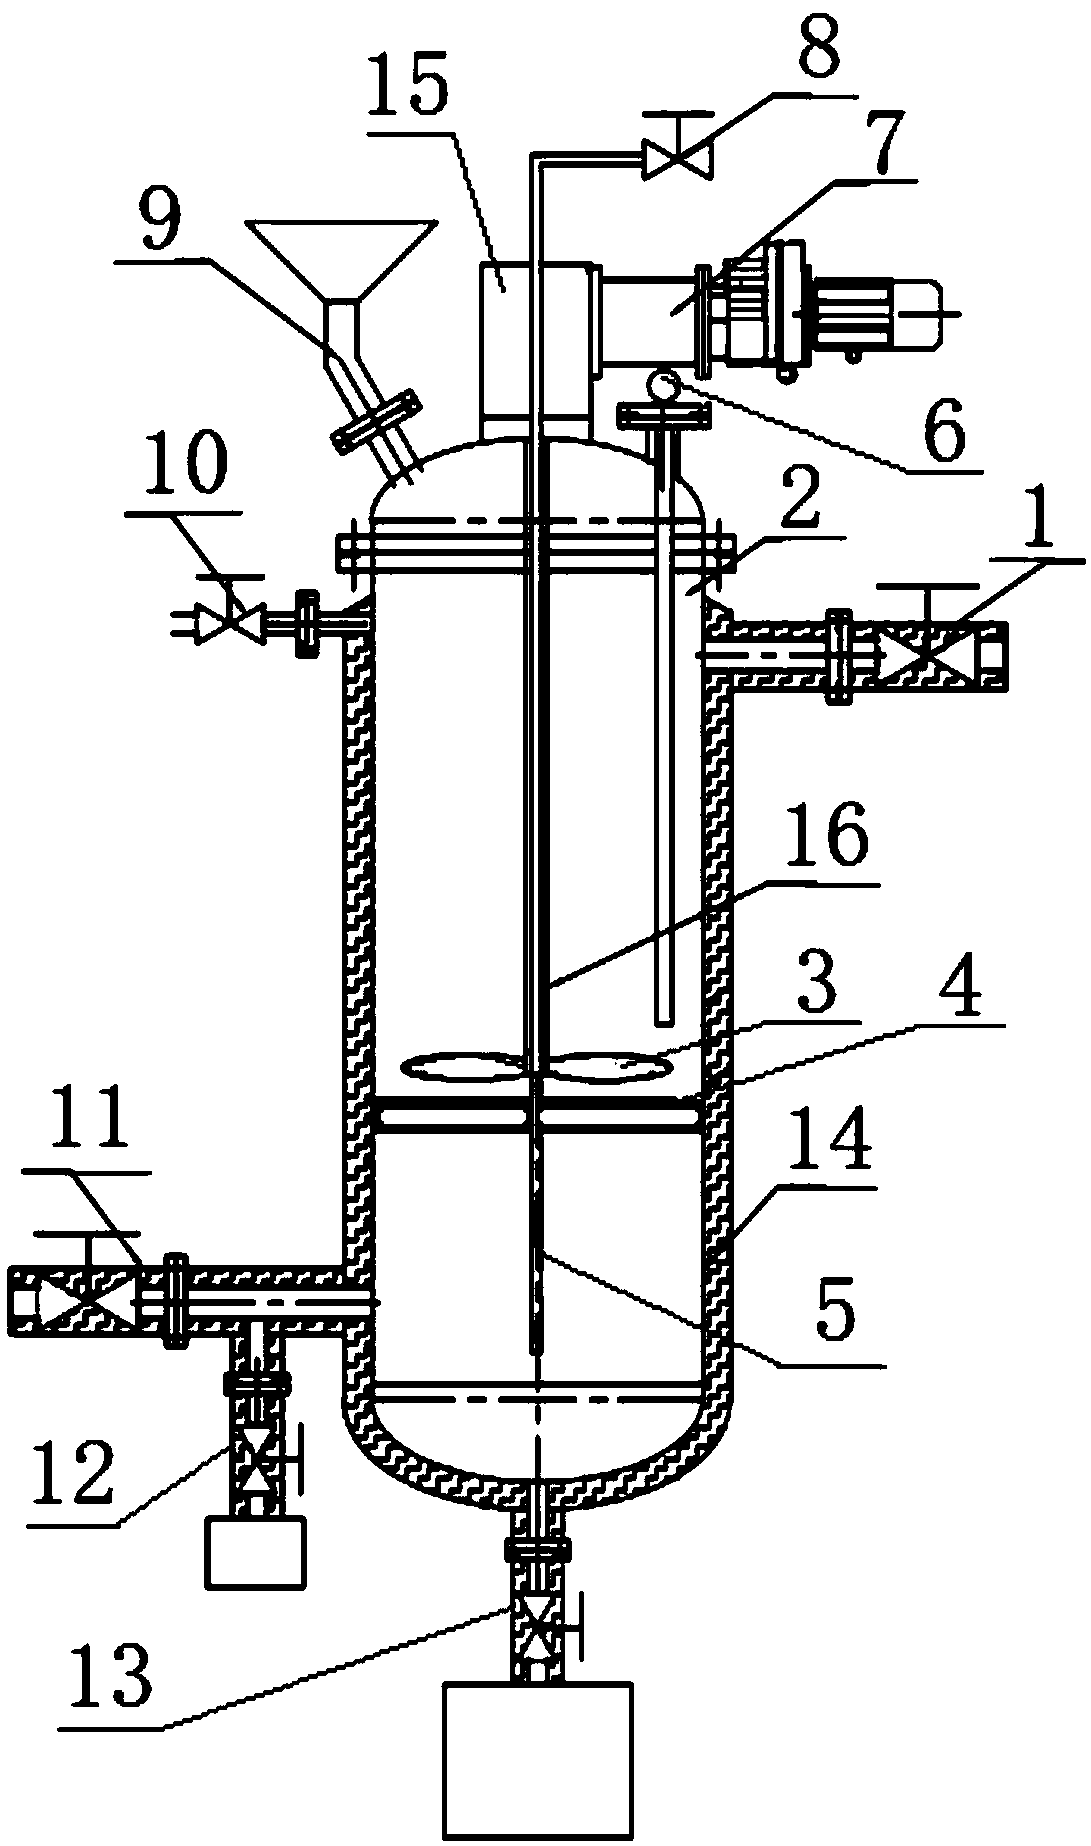 Purification and Performance Enhancement of High Temperature Liquid Nitrate Molten Salt Tank